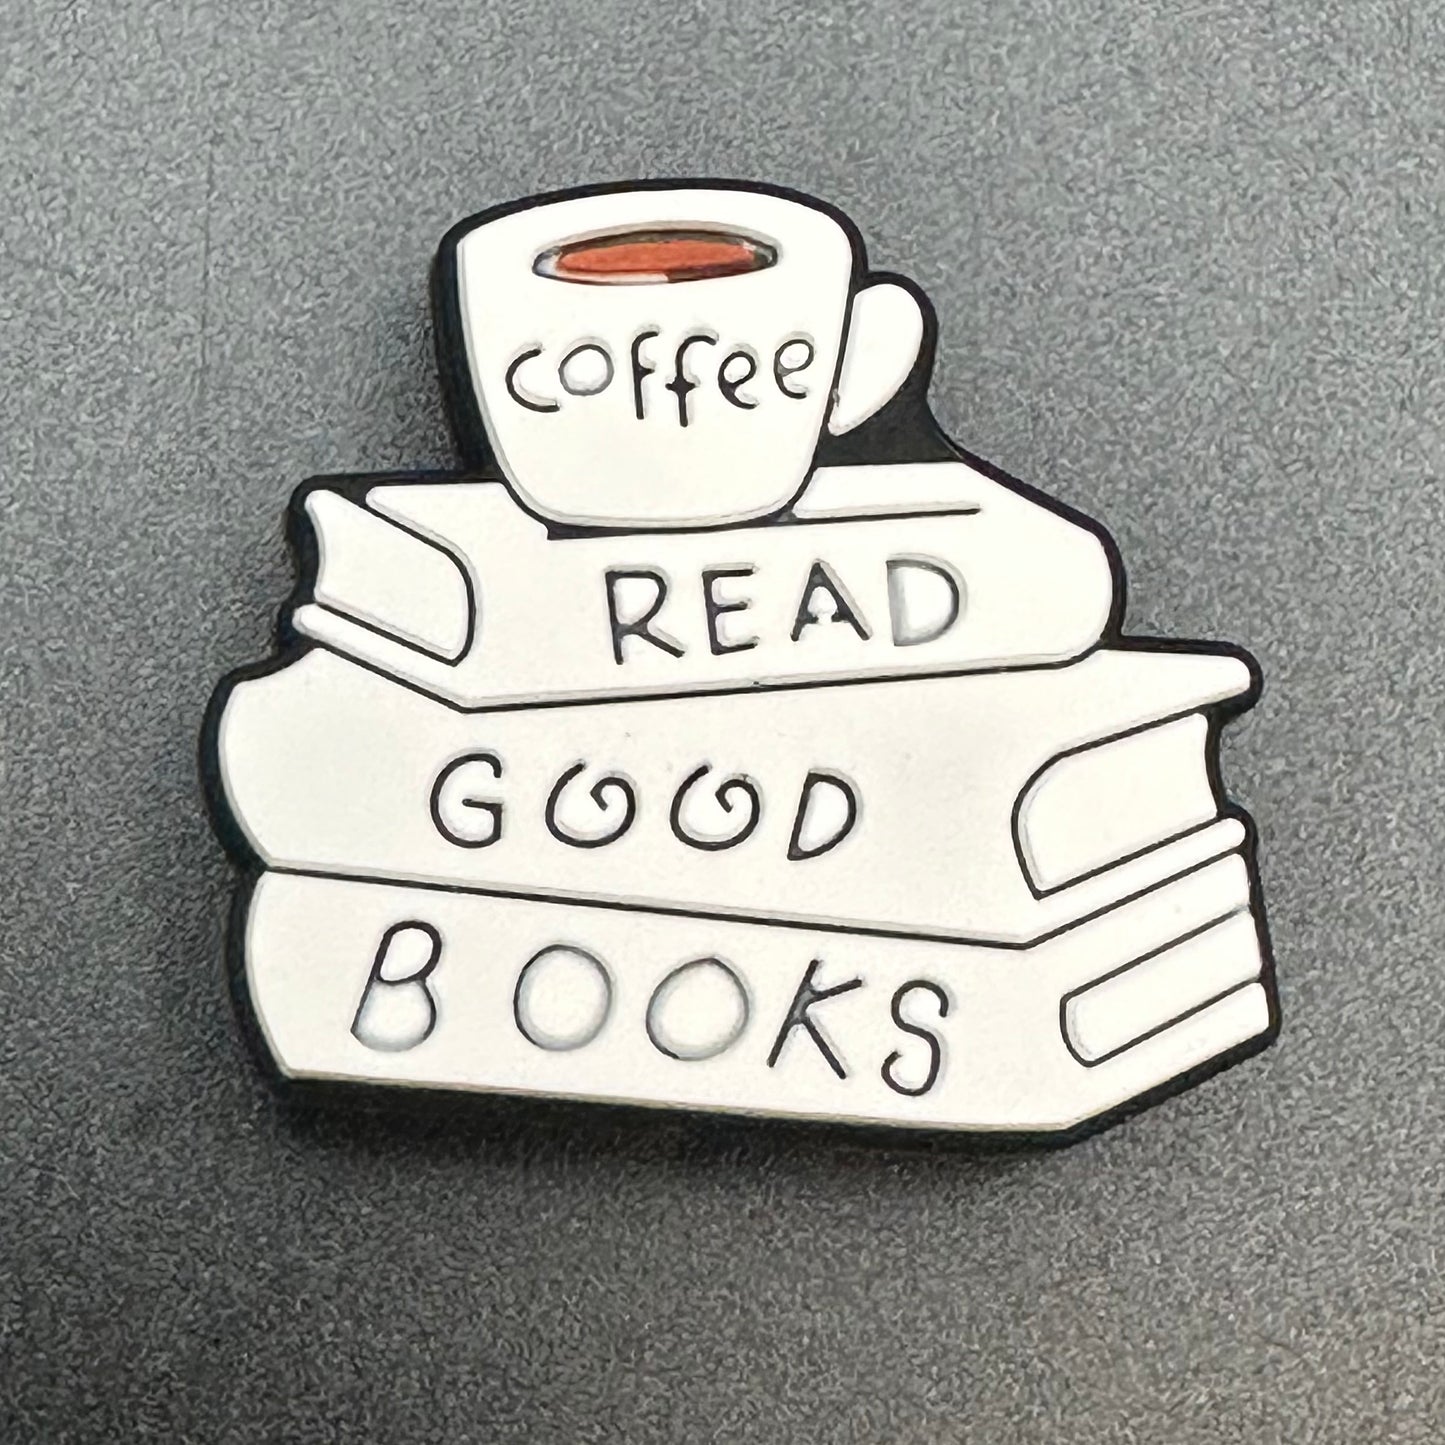 Focal Bead, Coffee Read Good Books